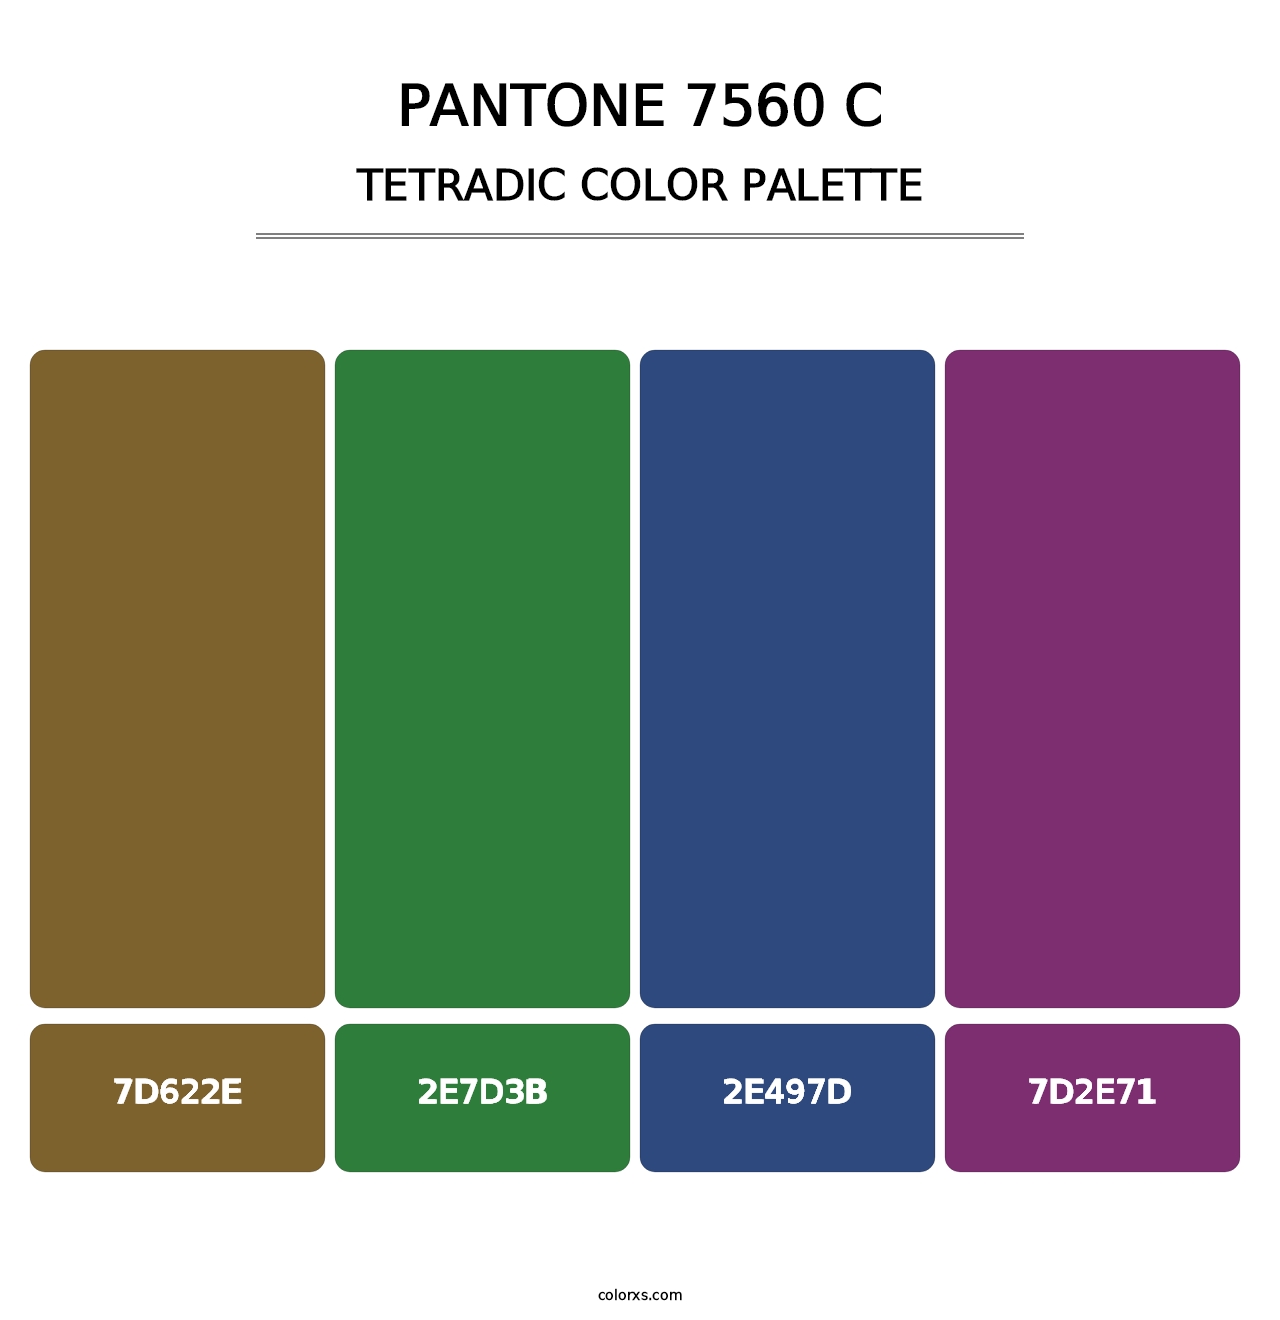 PANTONE 7560 C - Tetradic Color Palette